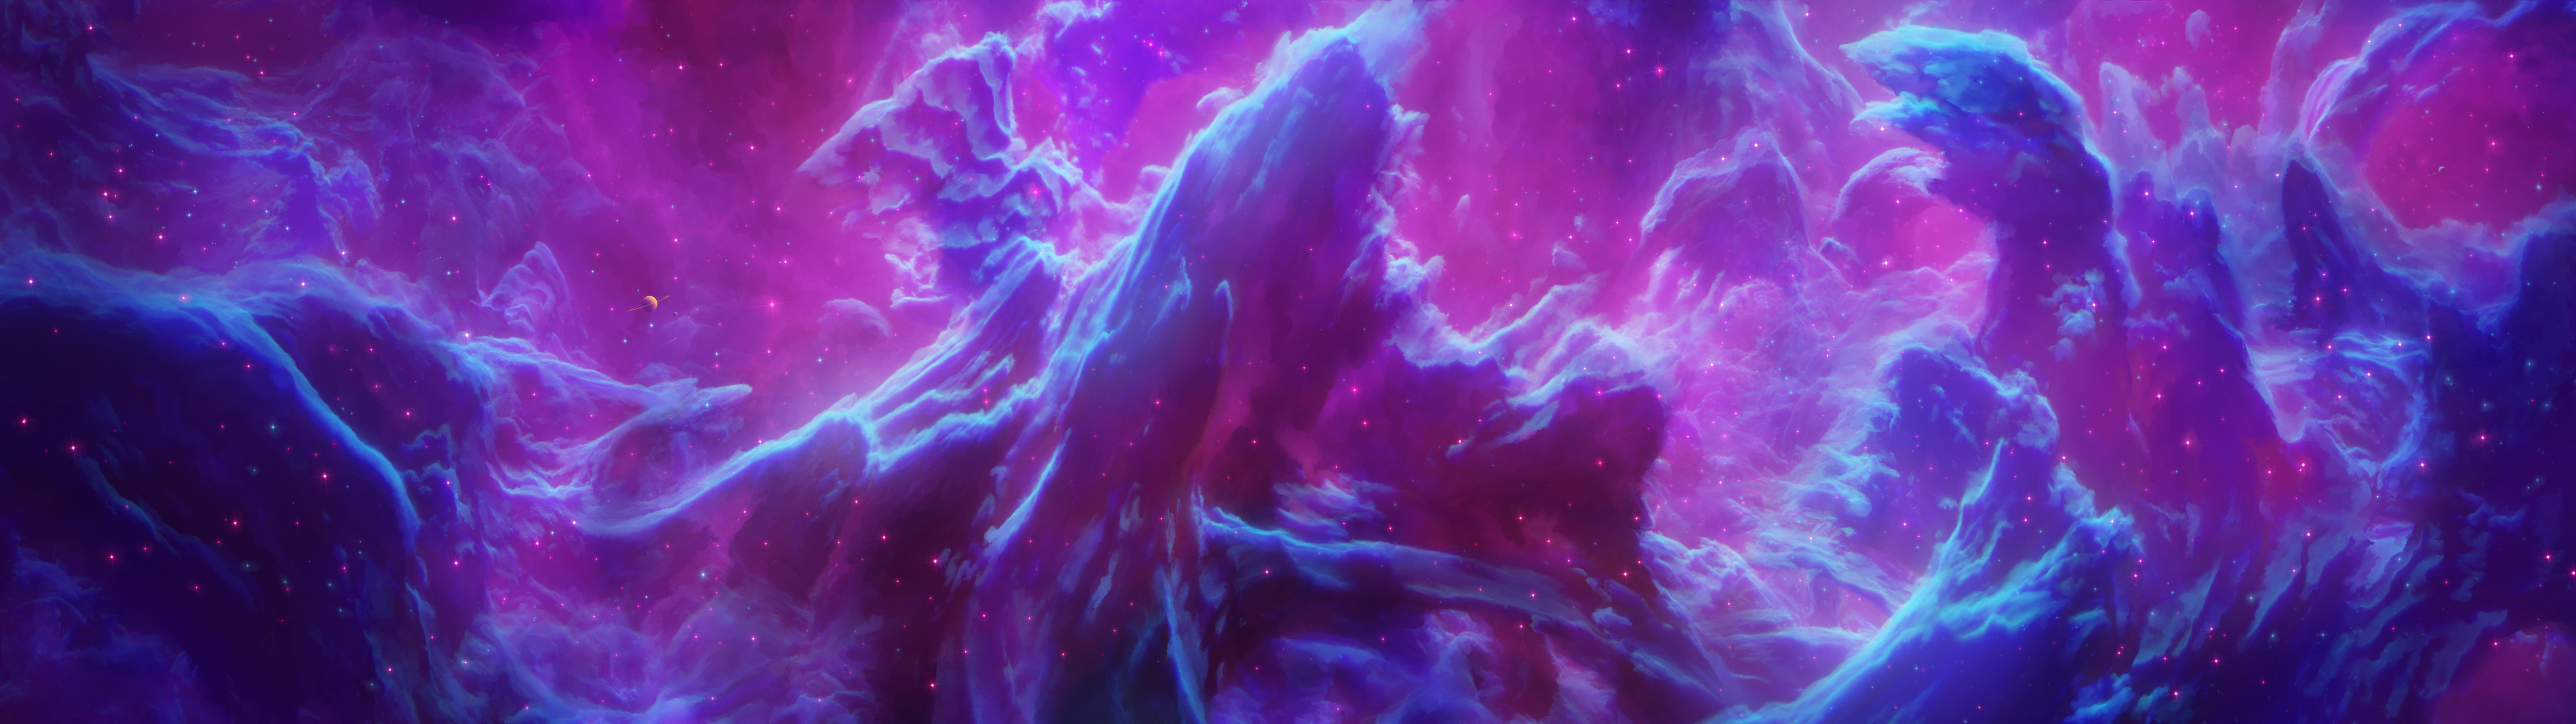  Purple  Space Stars 8k  HD Digital Universe 4k Wallpapers  